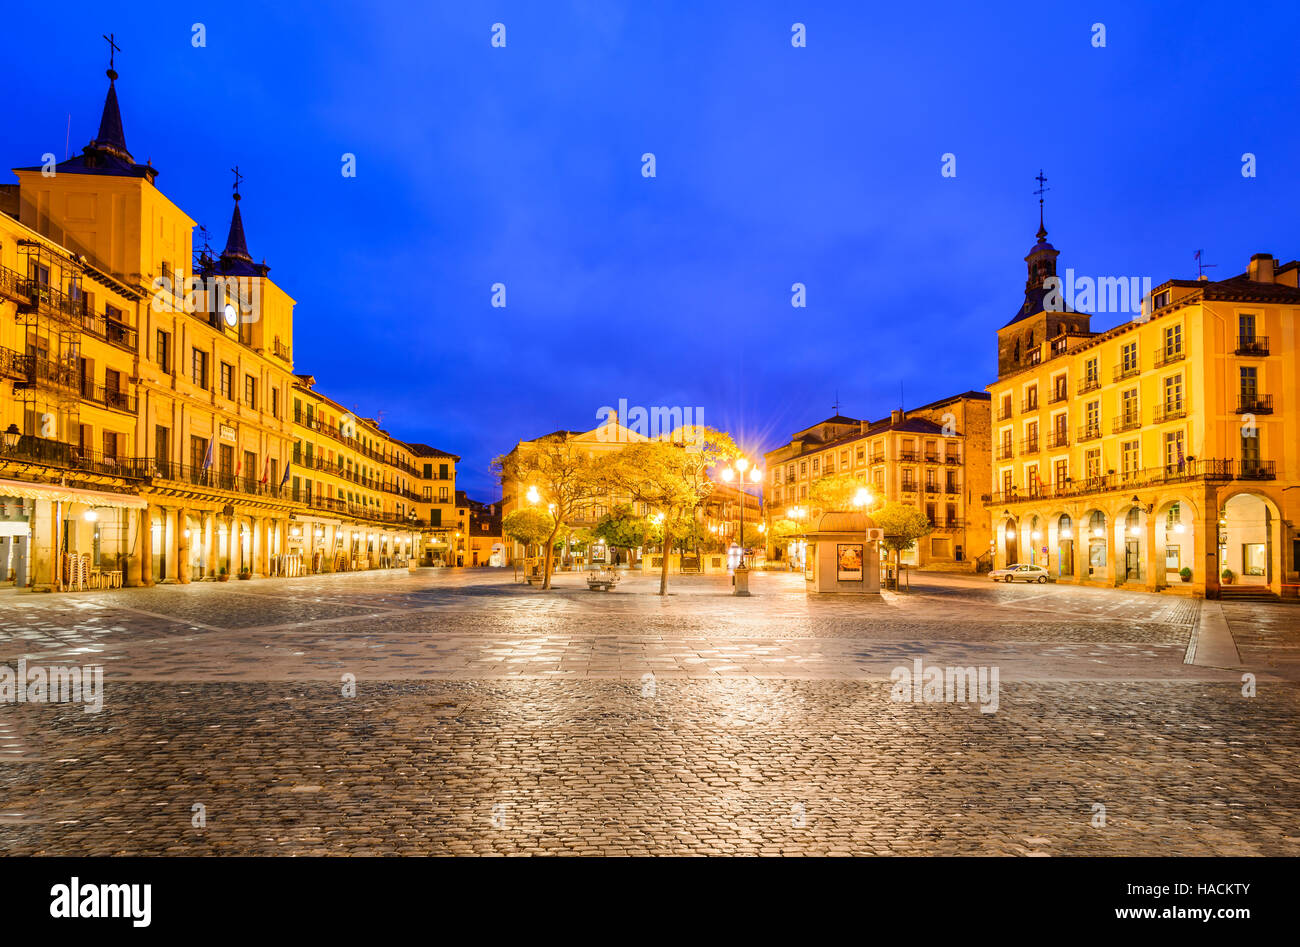 Segovia, Spain. Plaza Mayor in Segovia, a city in the autonomous region of Castilla y Leon, Spain. Stock Photo